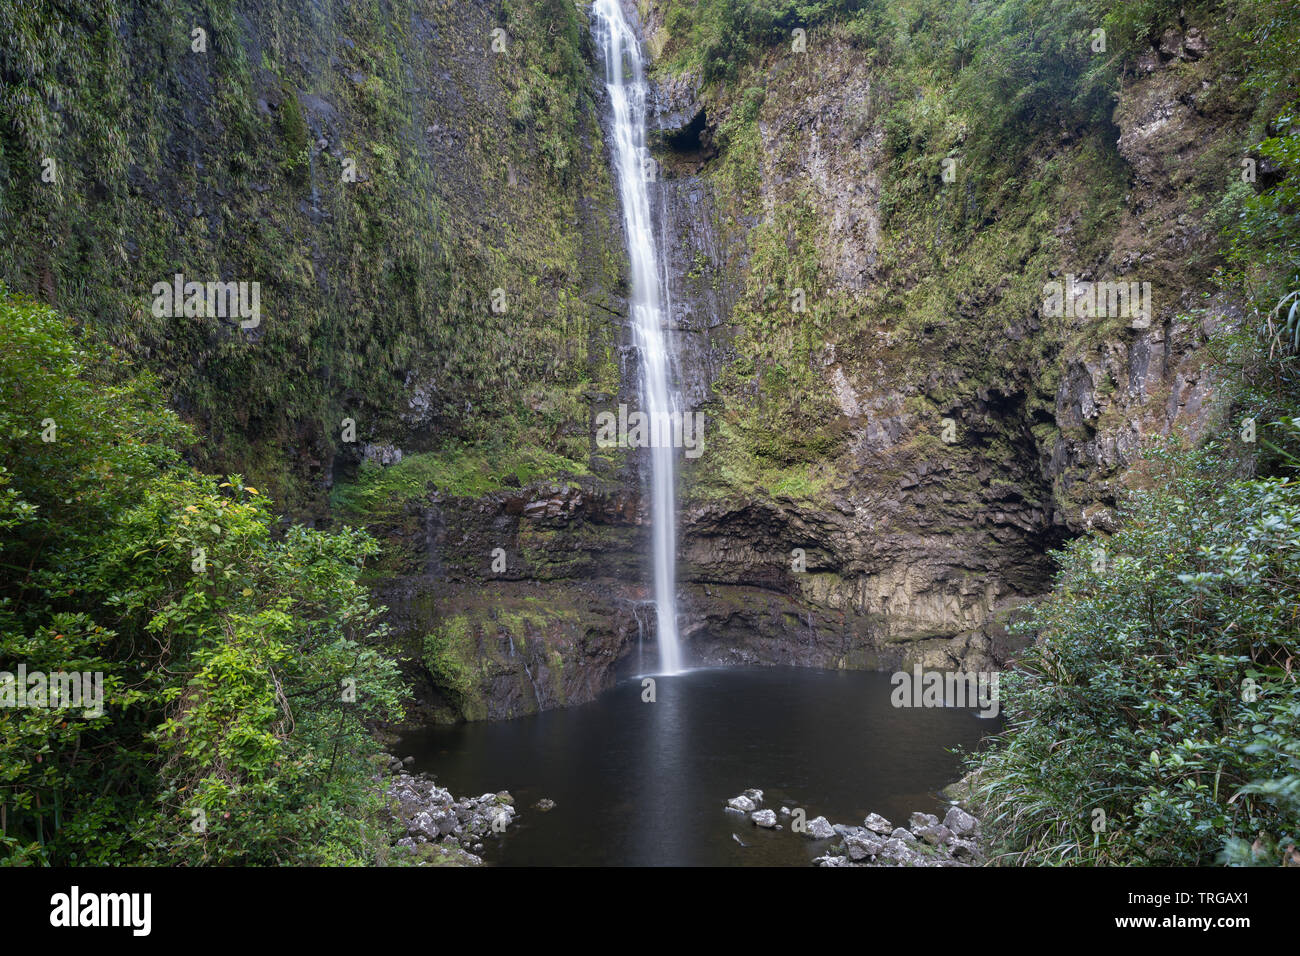 A cascade in the Marsouins Valley, Takamaka, Réunion Island, France Stock Photo